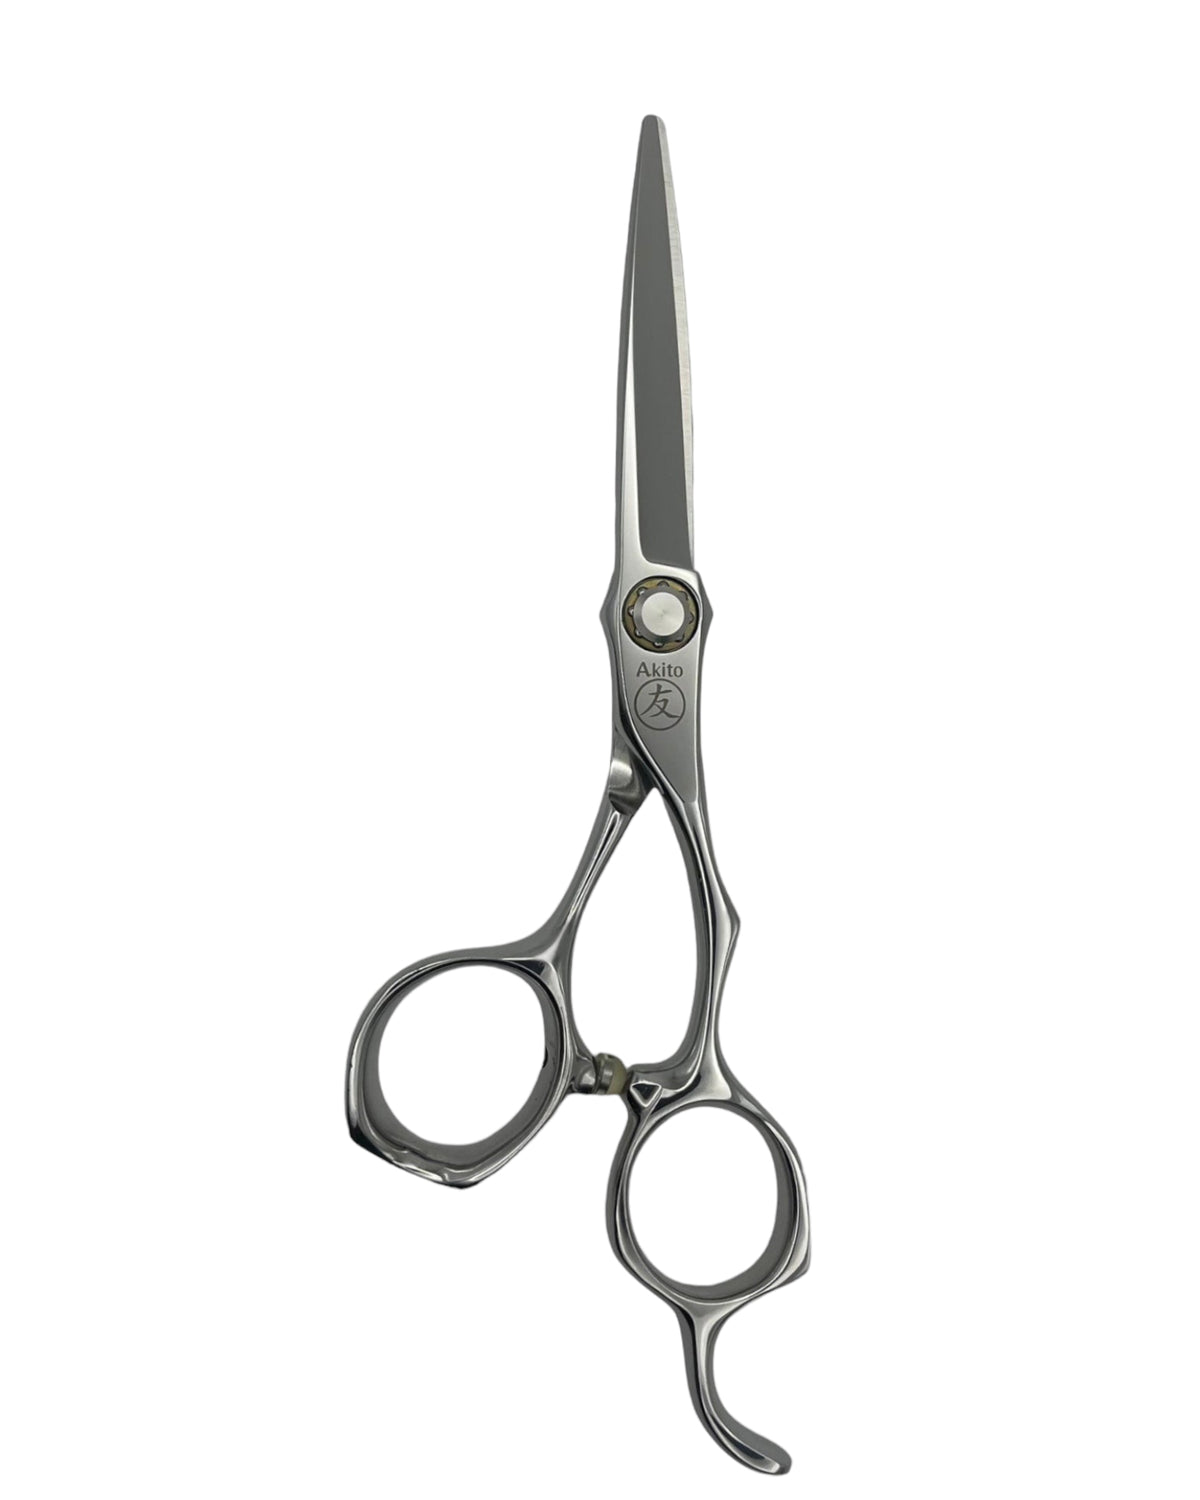 Kasai X 5.5 inch hairdressing scissors